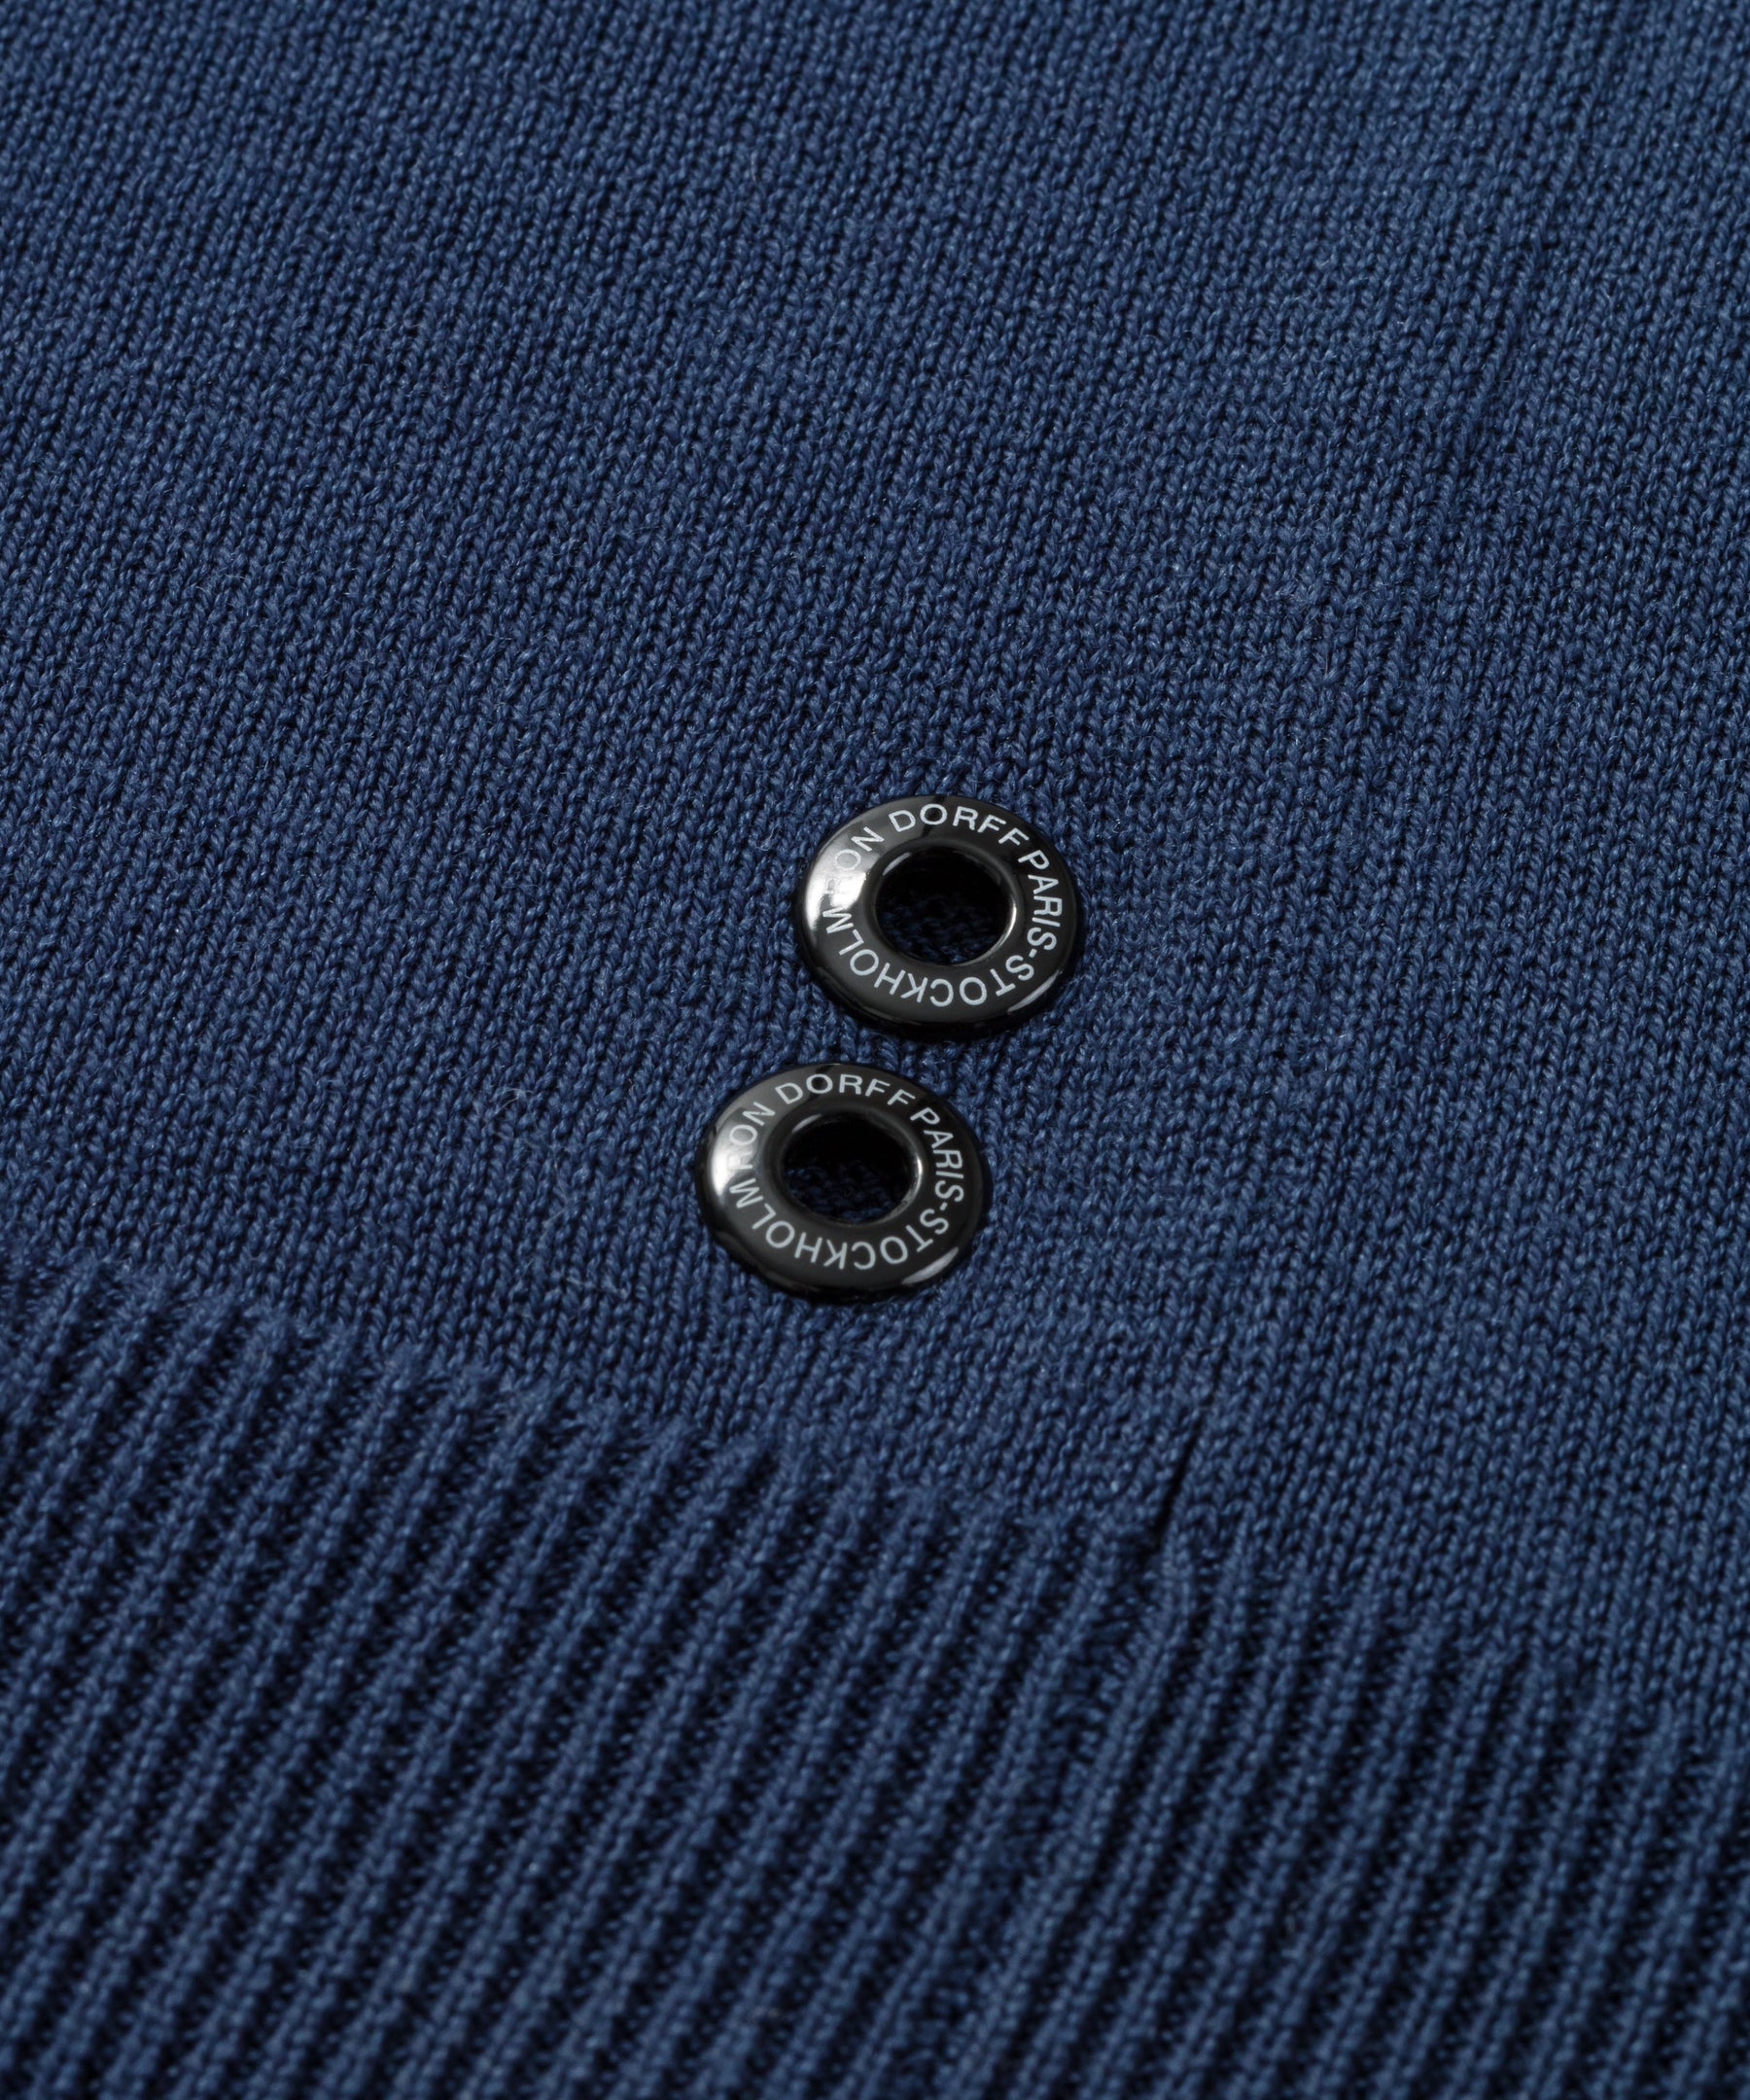 Cotton-Silk Long Sleeved RD Polo: Deep Blue